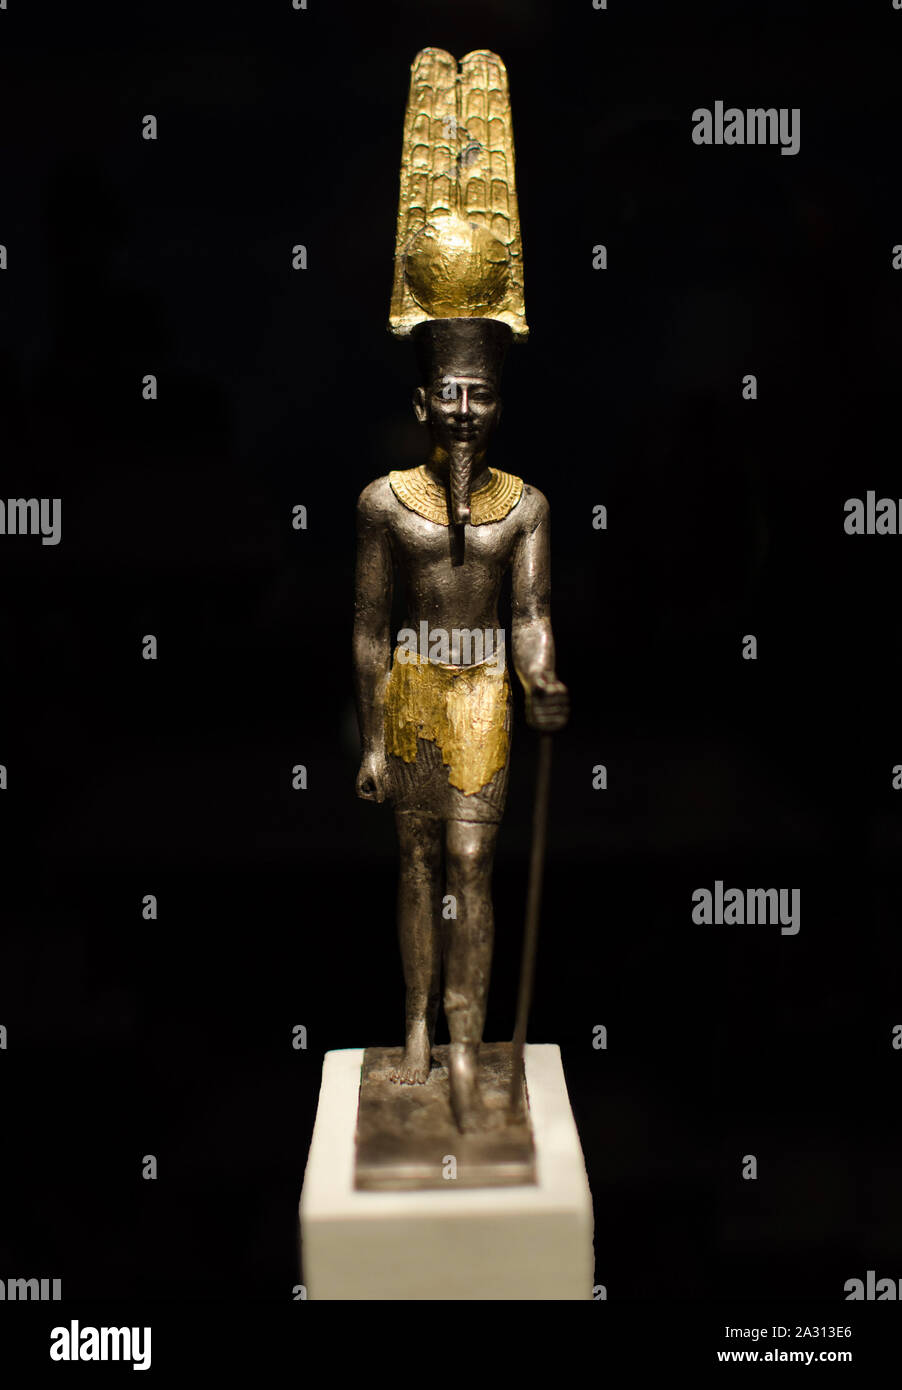 Chapado en oro plata figura de Amun-Ra en Caixaforum, Sevilla, España Foto de stock